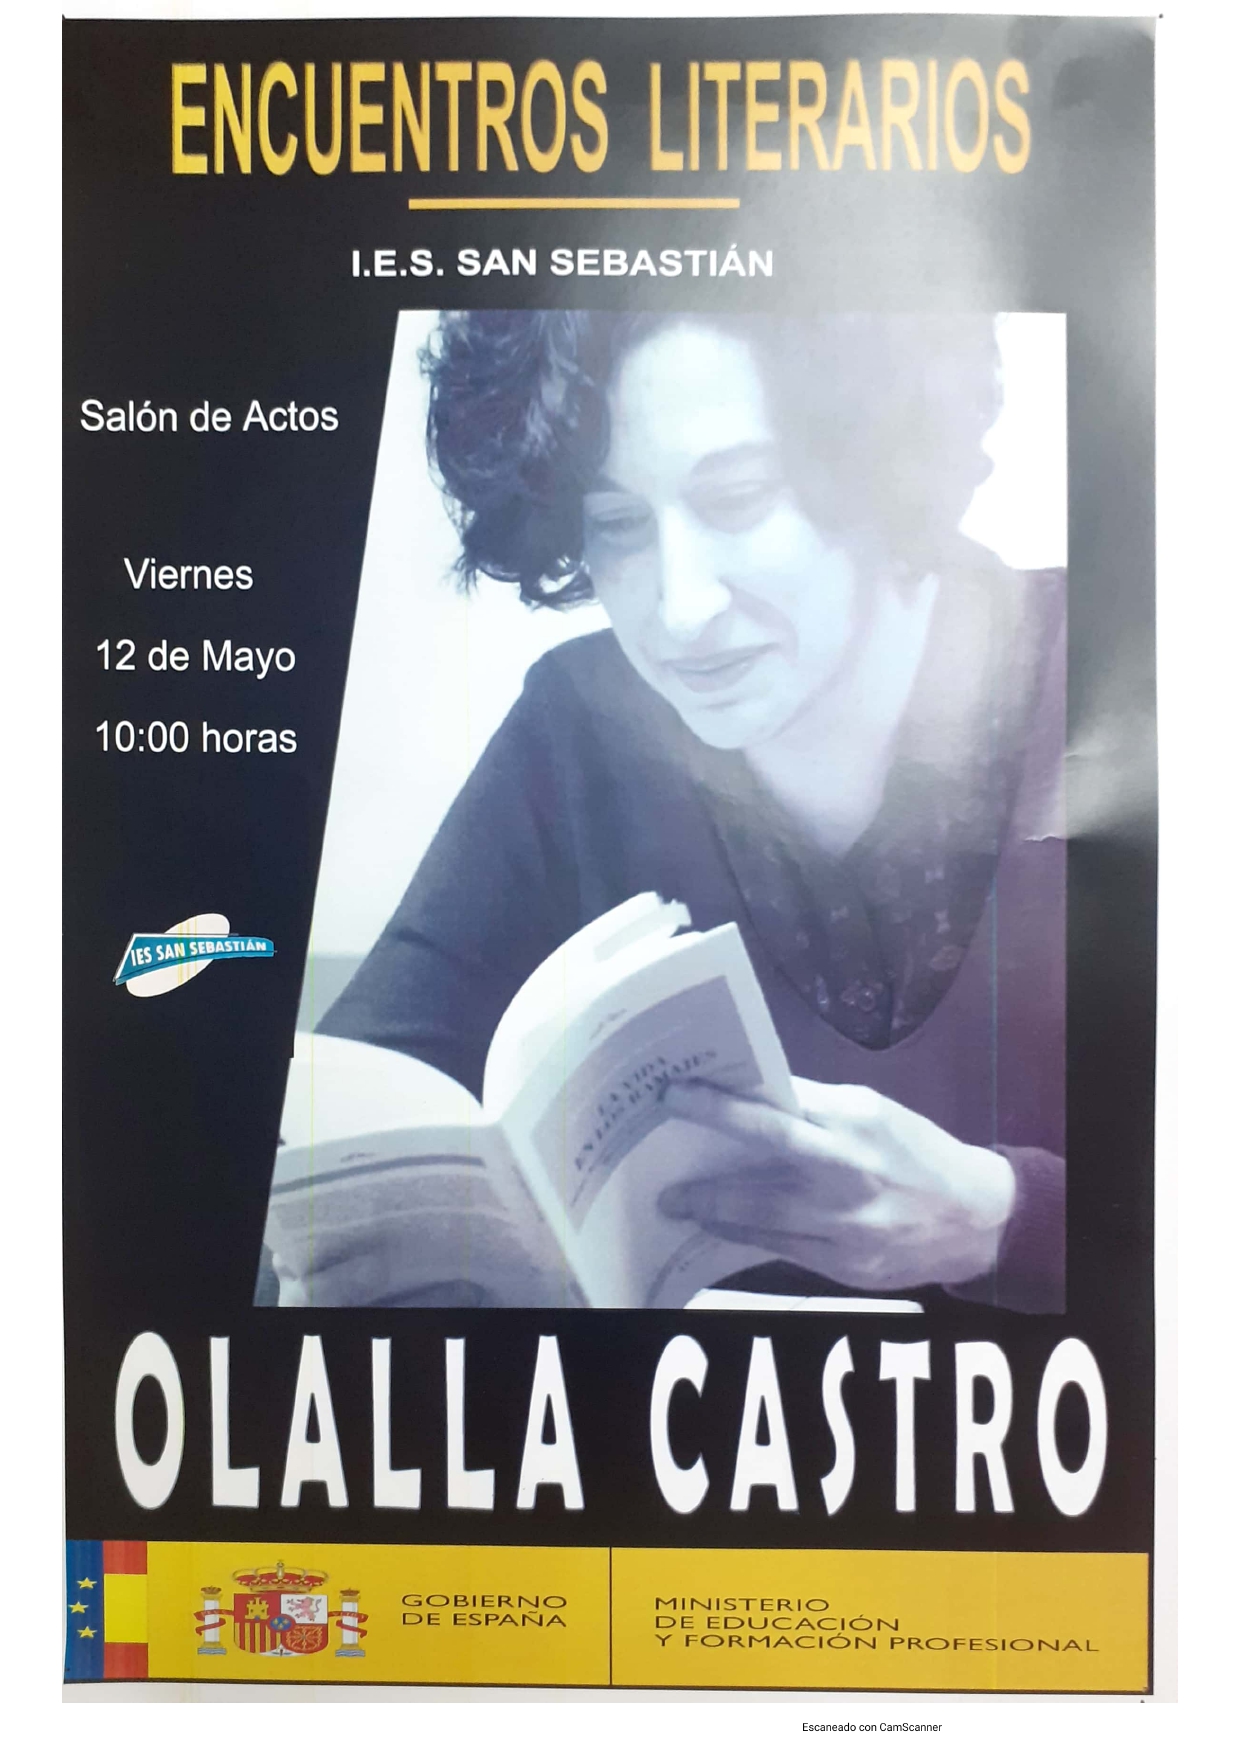 En este momento estás viendo Encuentros Literarios con Olalla Castro